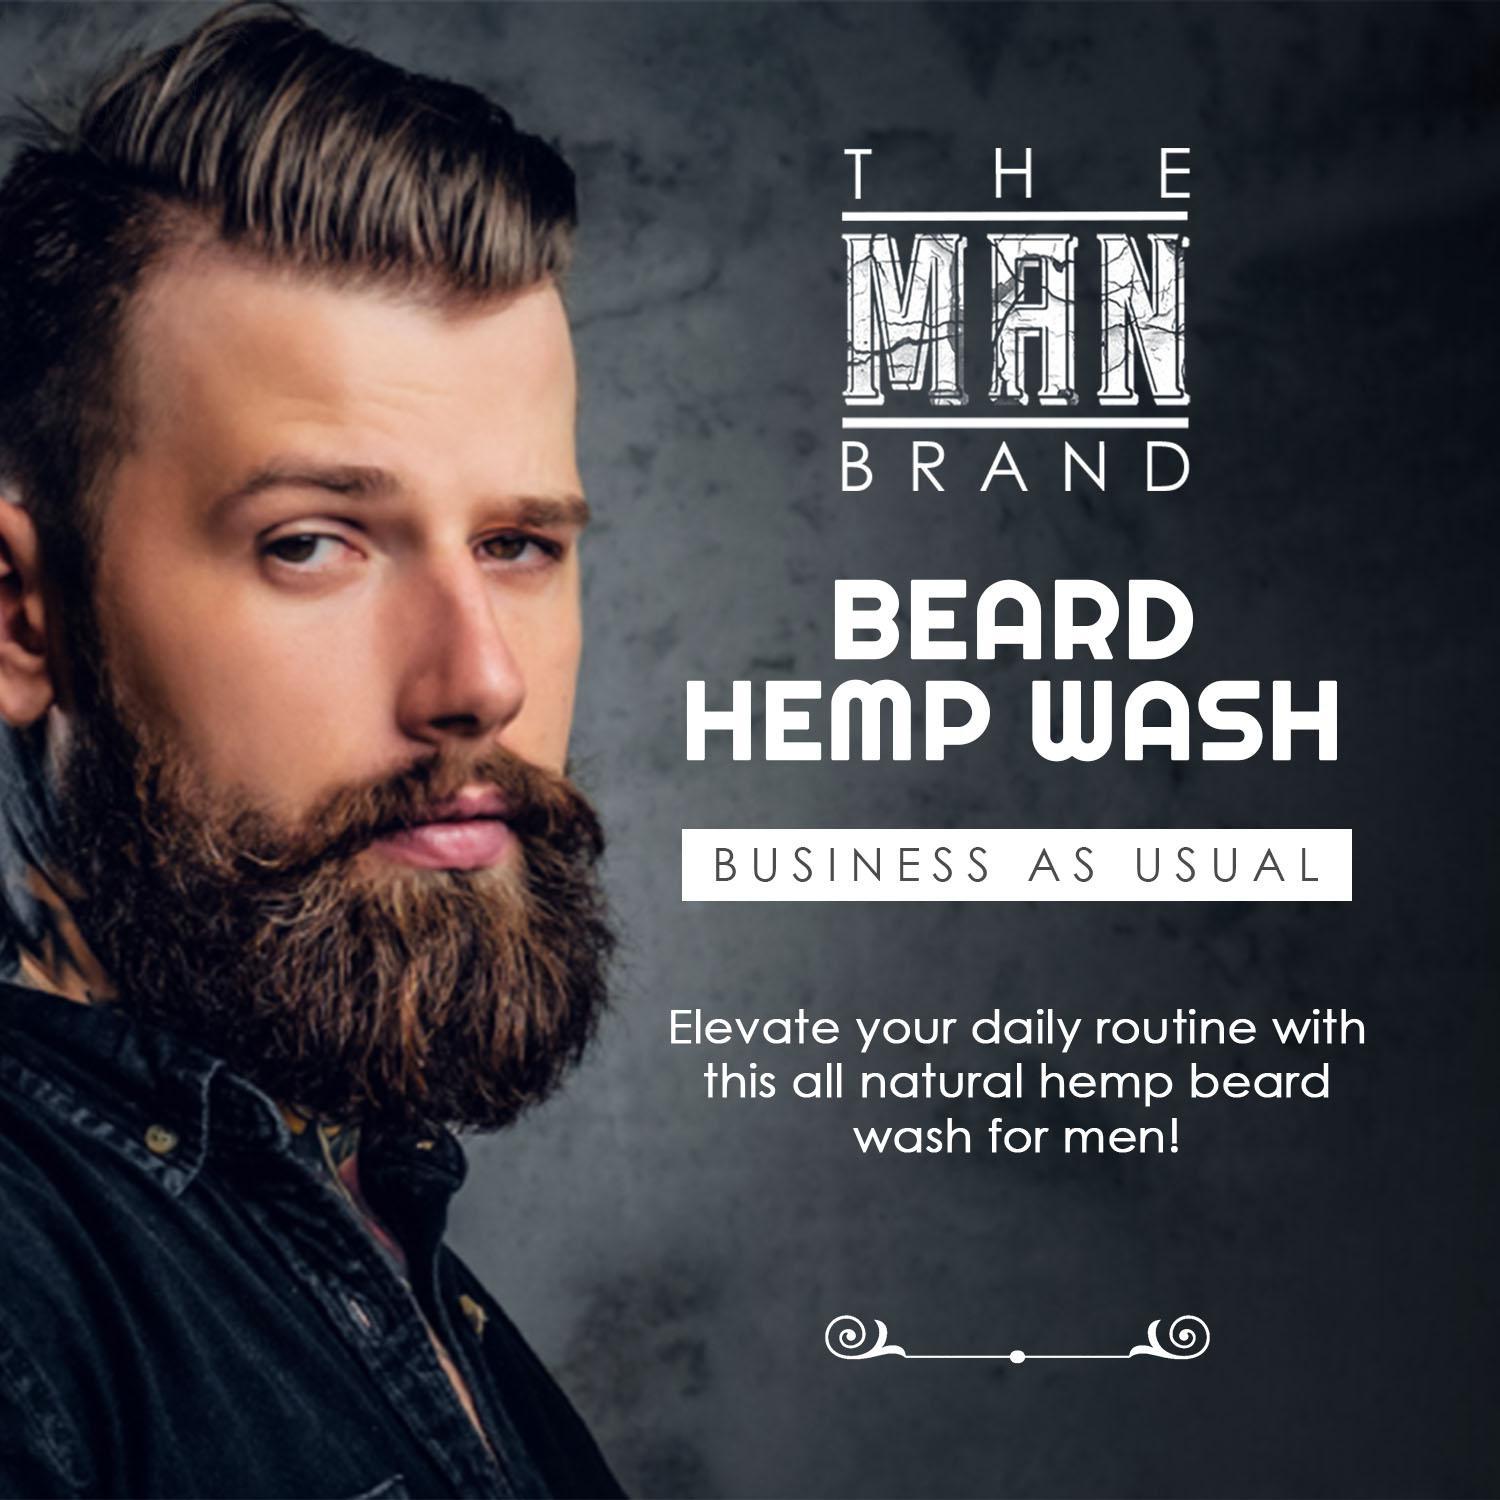 The Man Brand Beard Hemp Wash - Beard Cleanser for Men - Beard Wash with Aloe Vera Oil and Organic Hemp Seed Oil - Scented Beard Moisturizer For Grooming